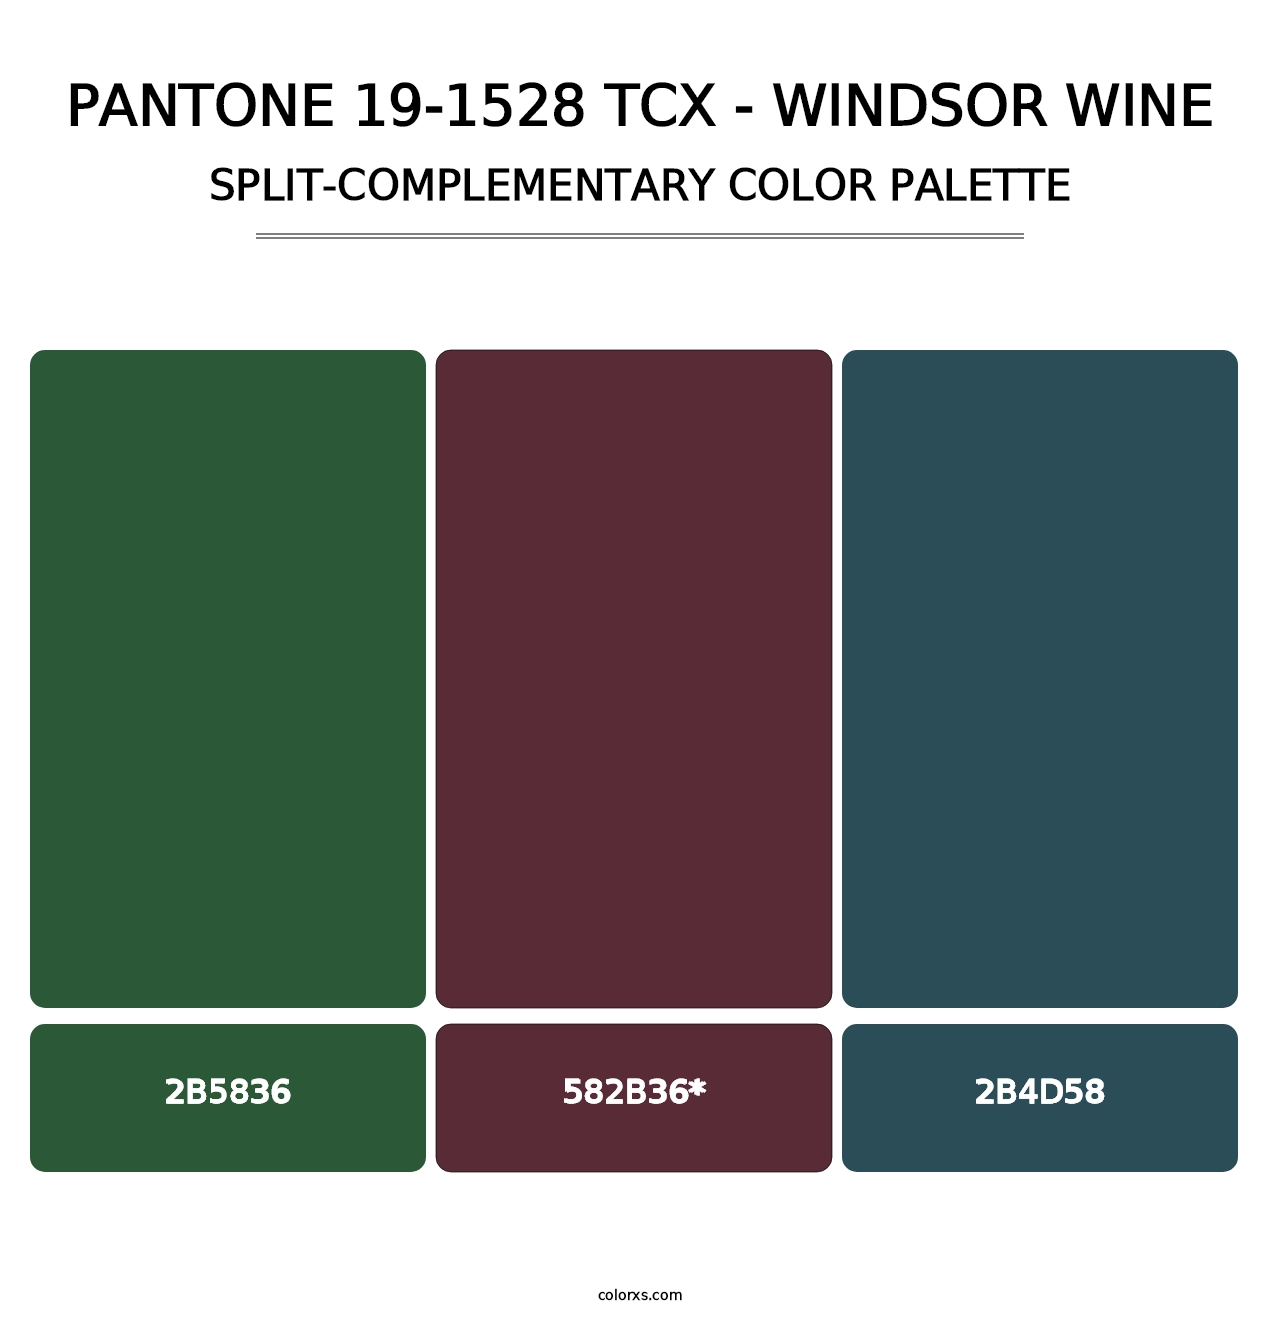 PANTONE 19-1528 TCX - Windsor Wine - Split-Complementary Color Palette